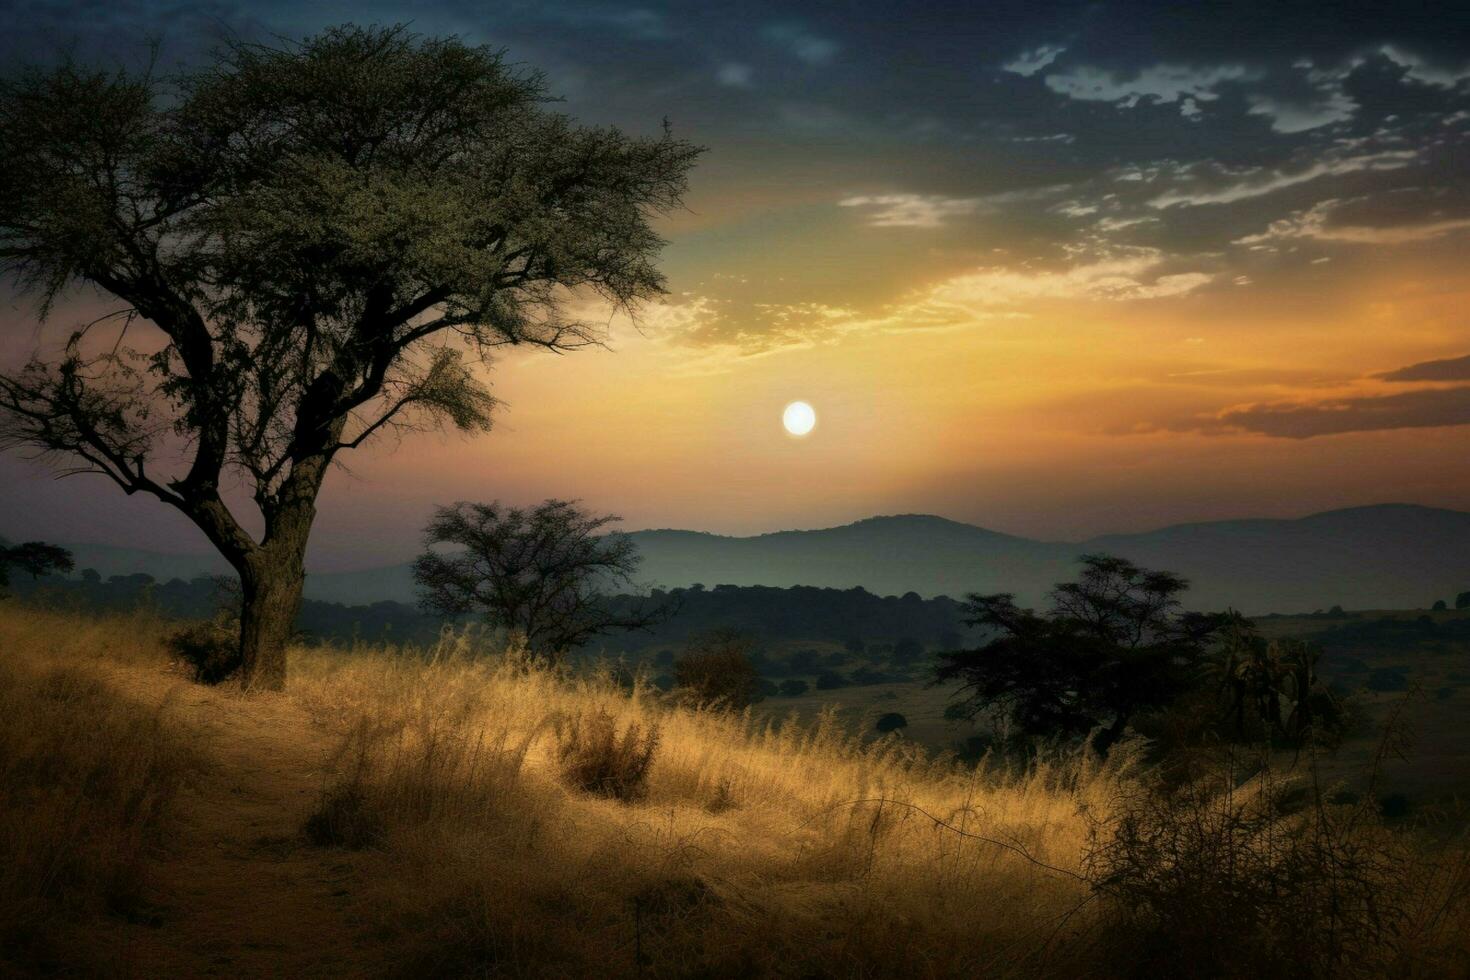 The full moon illuminating an African landscape photo